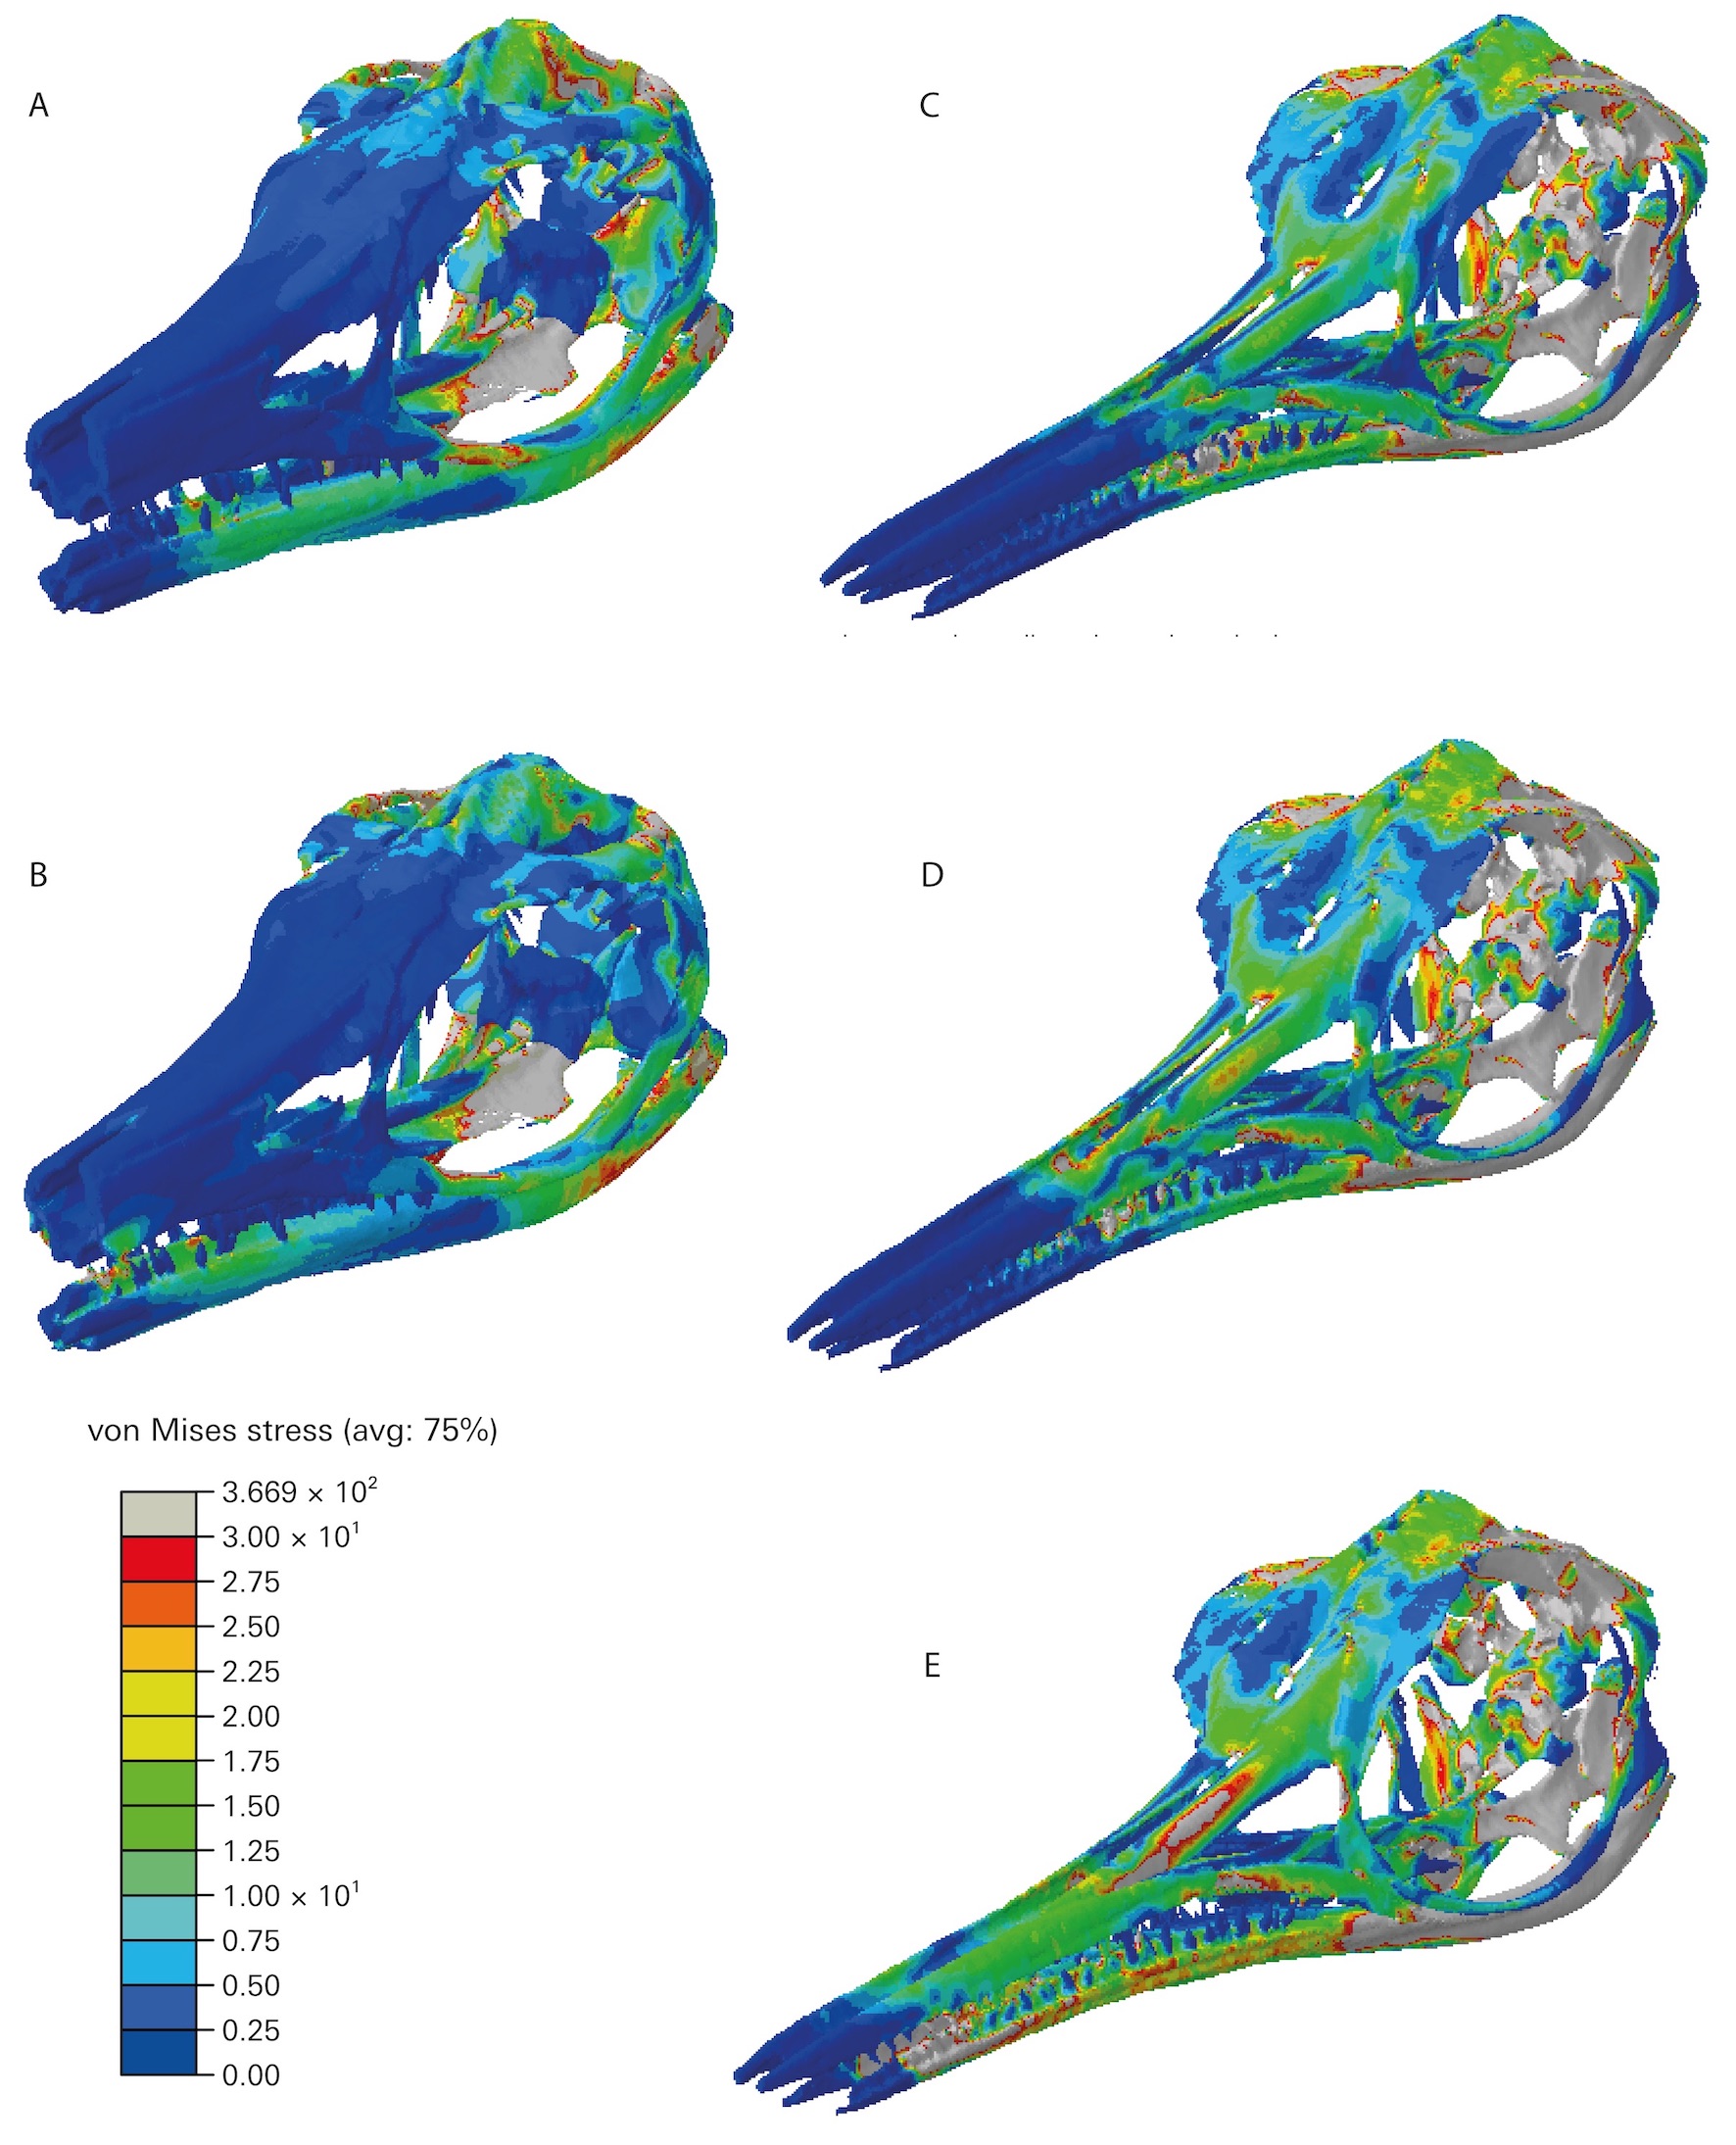 Figure showing 3D models of Ichthyosaurs skull